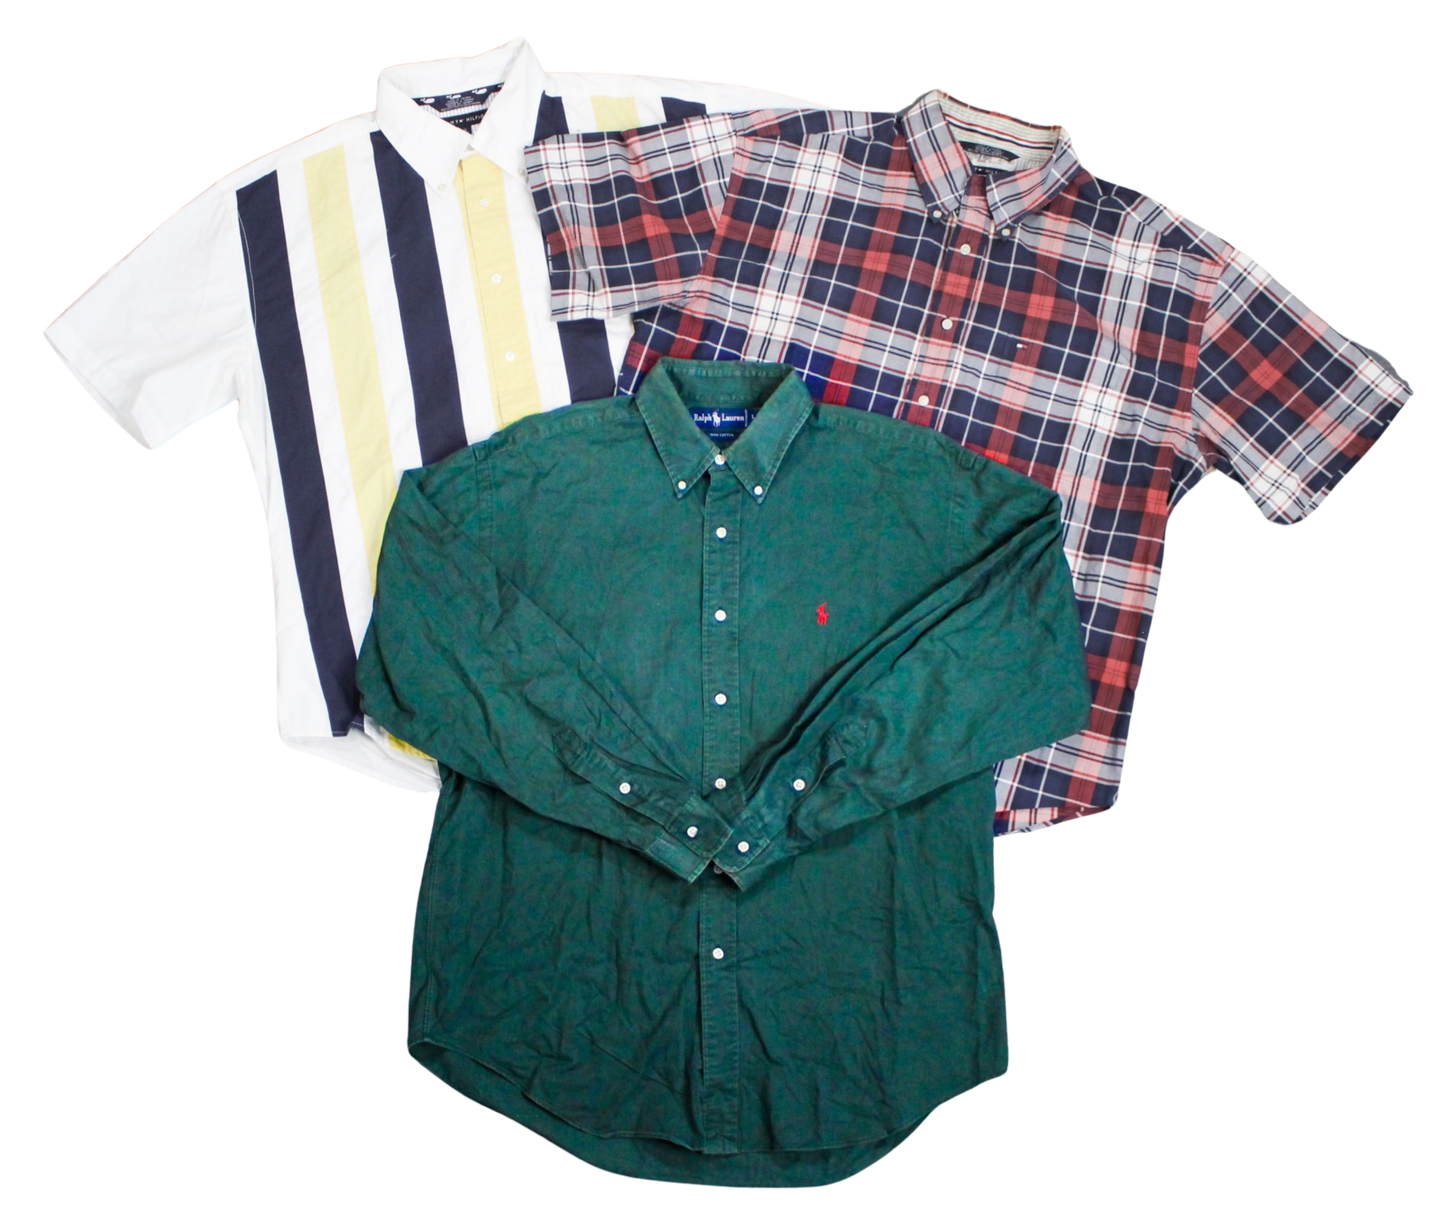 Polo / Tommy Dress Shirts